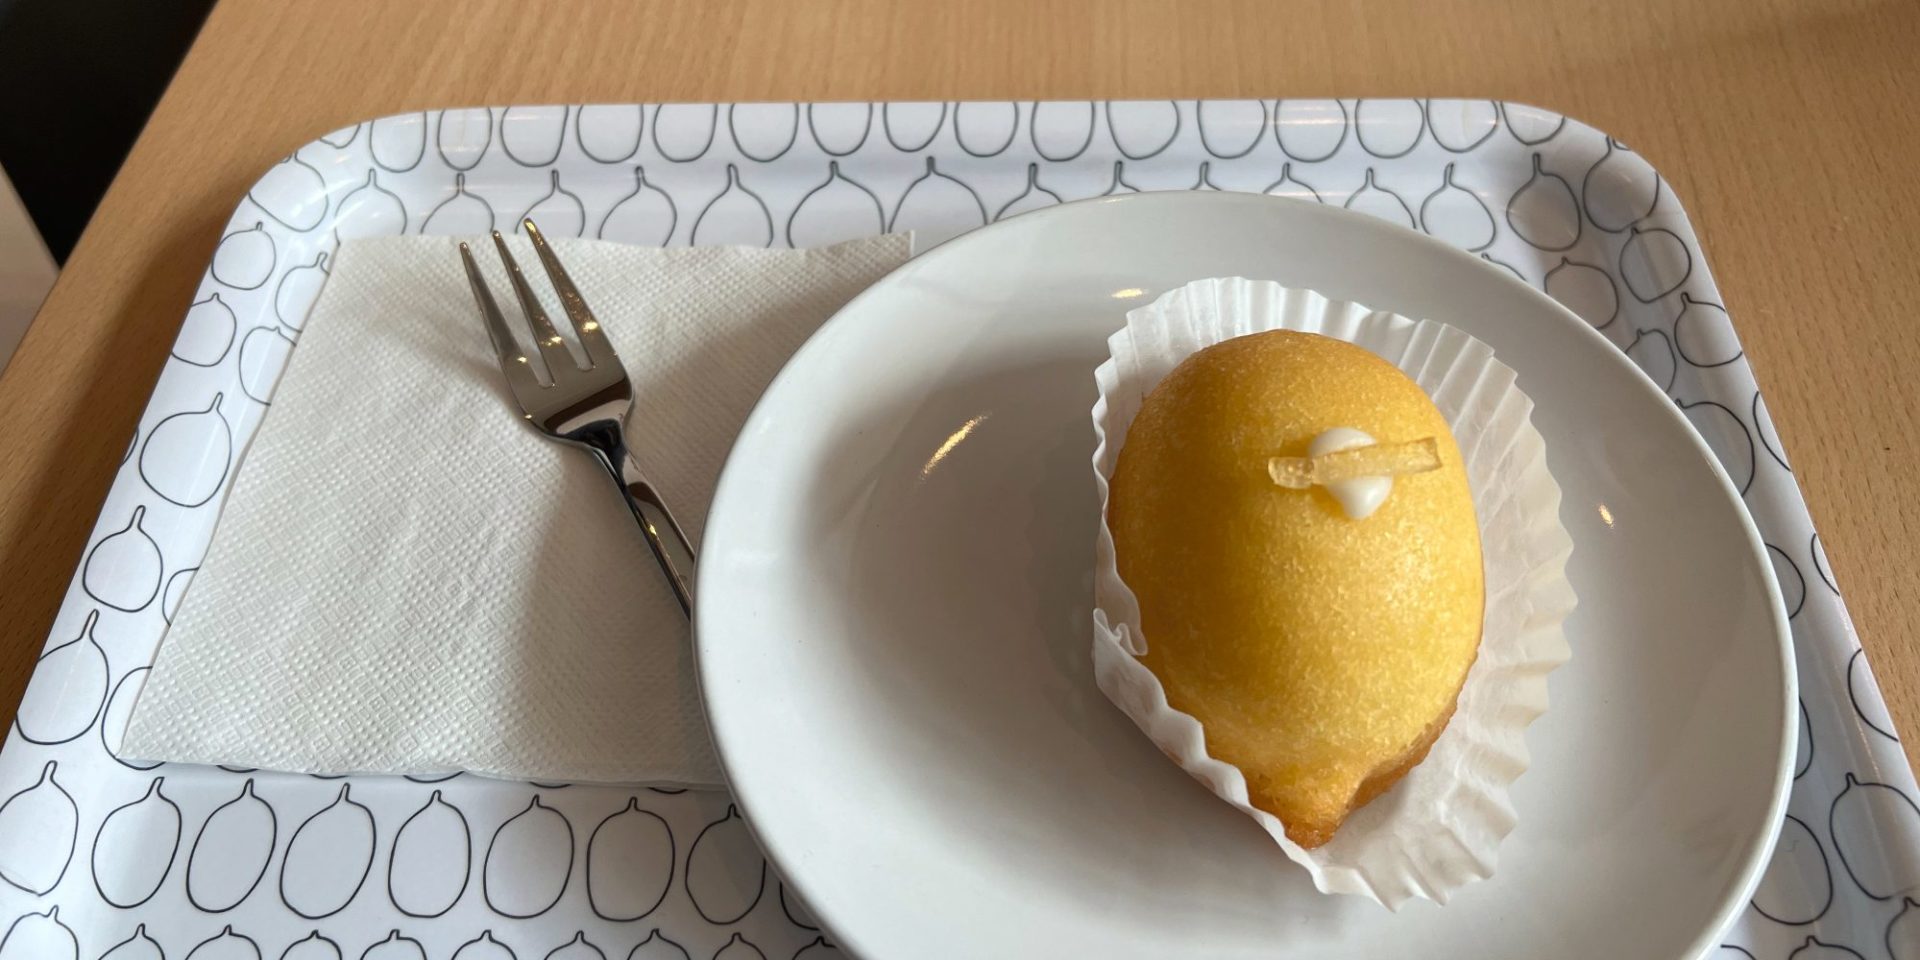 A yellow lemon-shaped treat on a white plate.